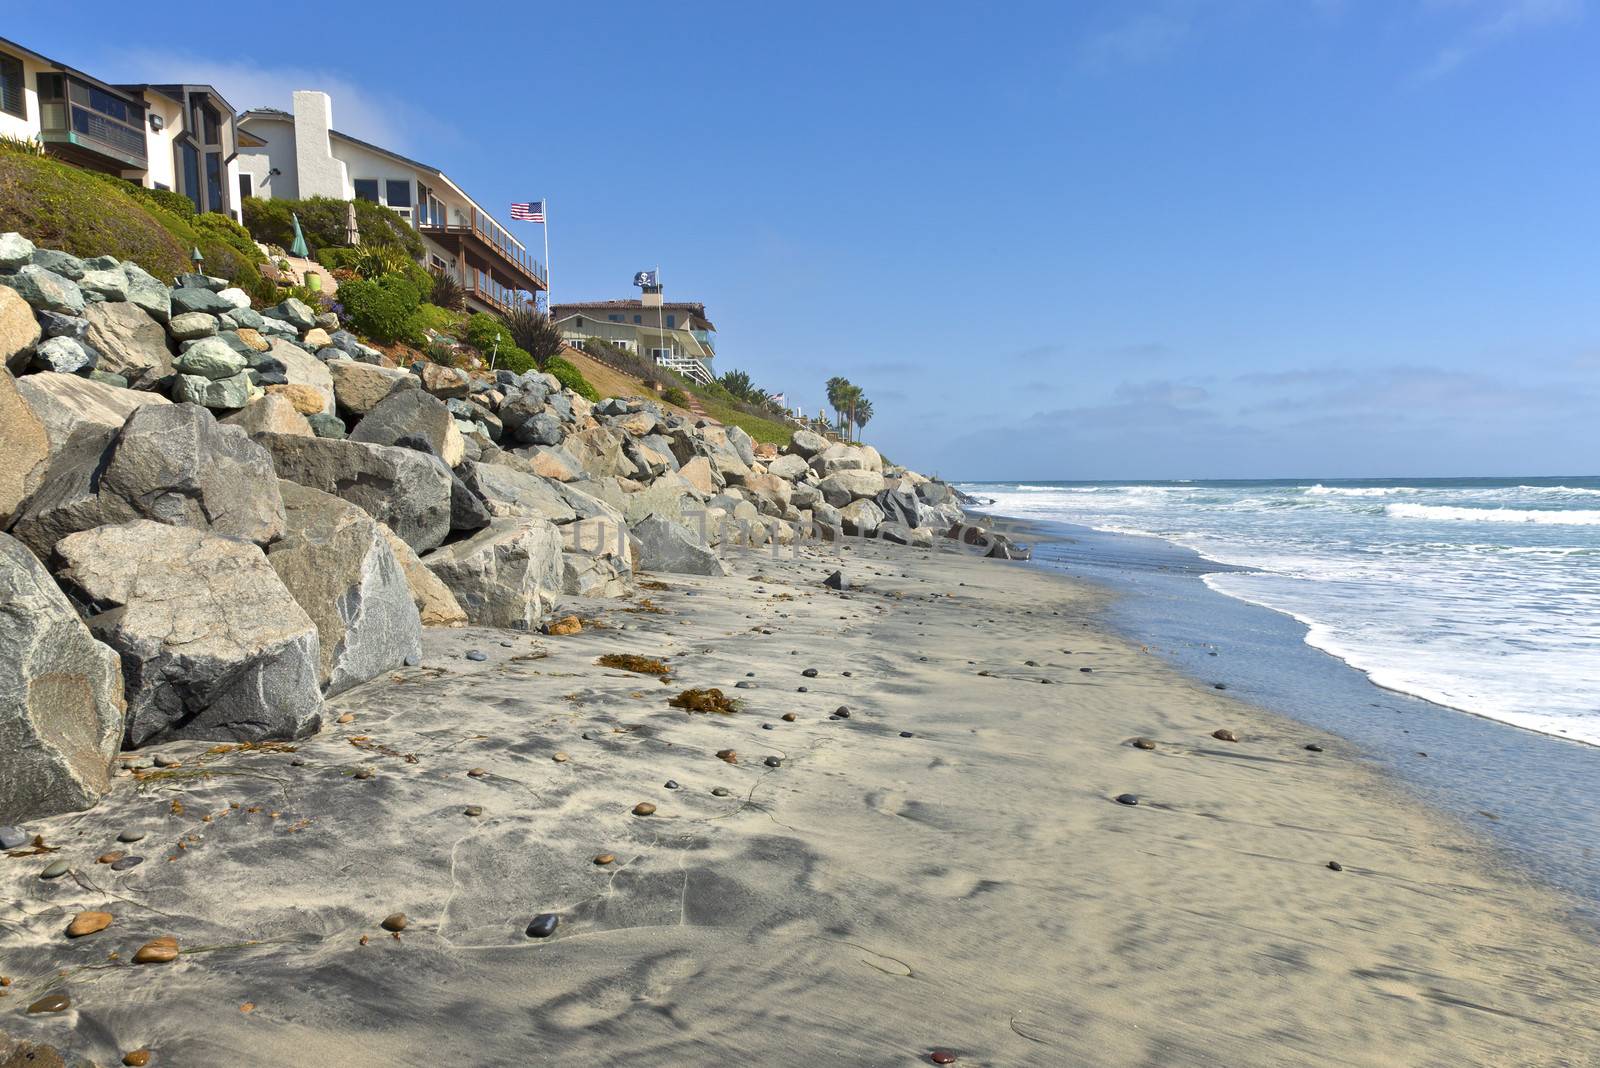 Stacks of large rocks erosion control California beaches.